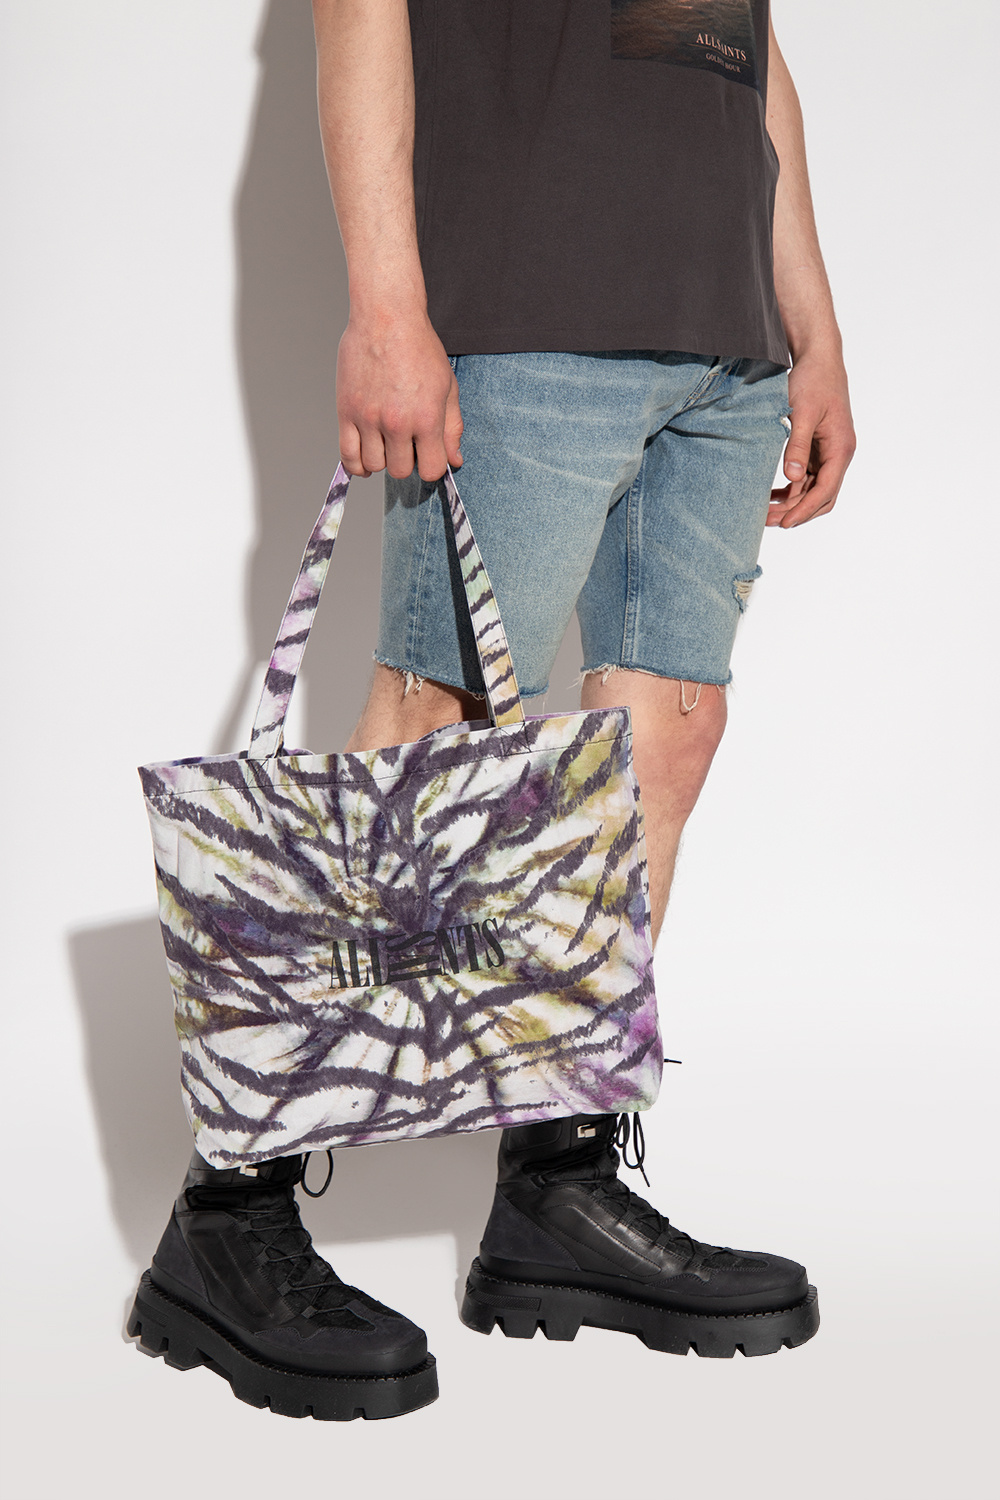 AllSaints ‘Tiger’ shopper Vuitton bag